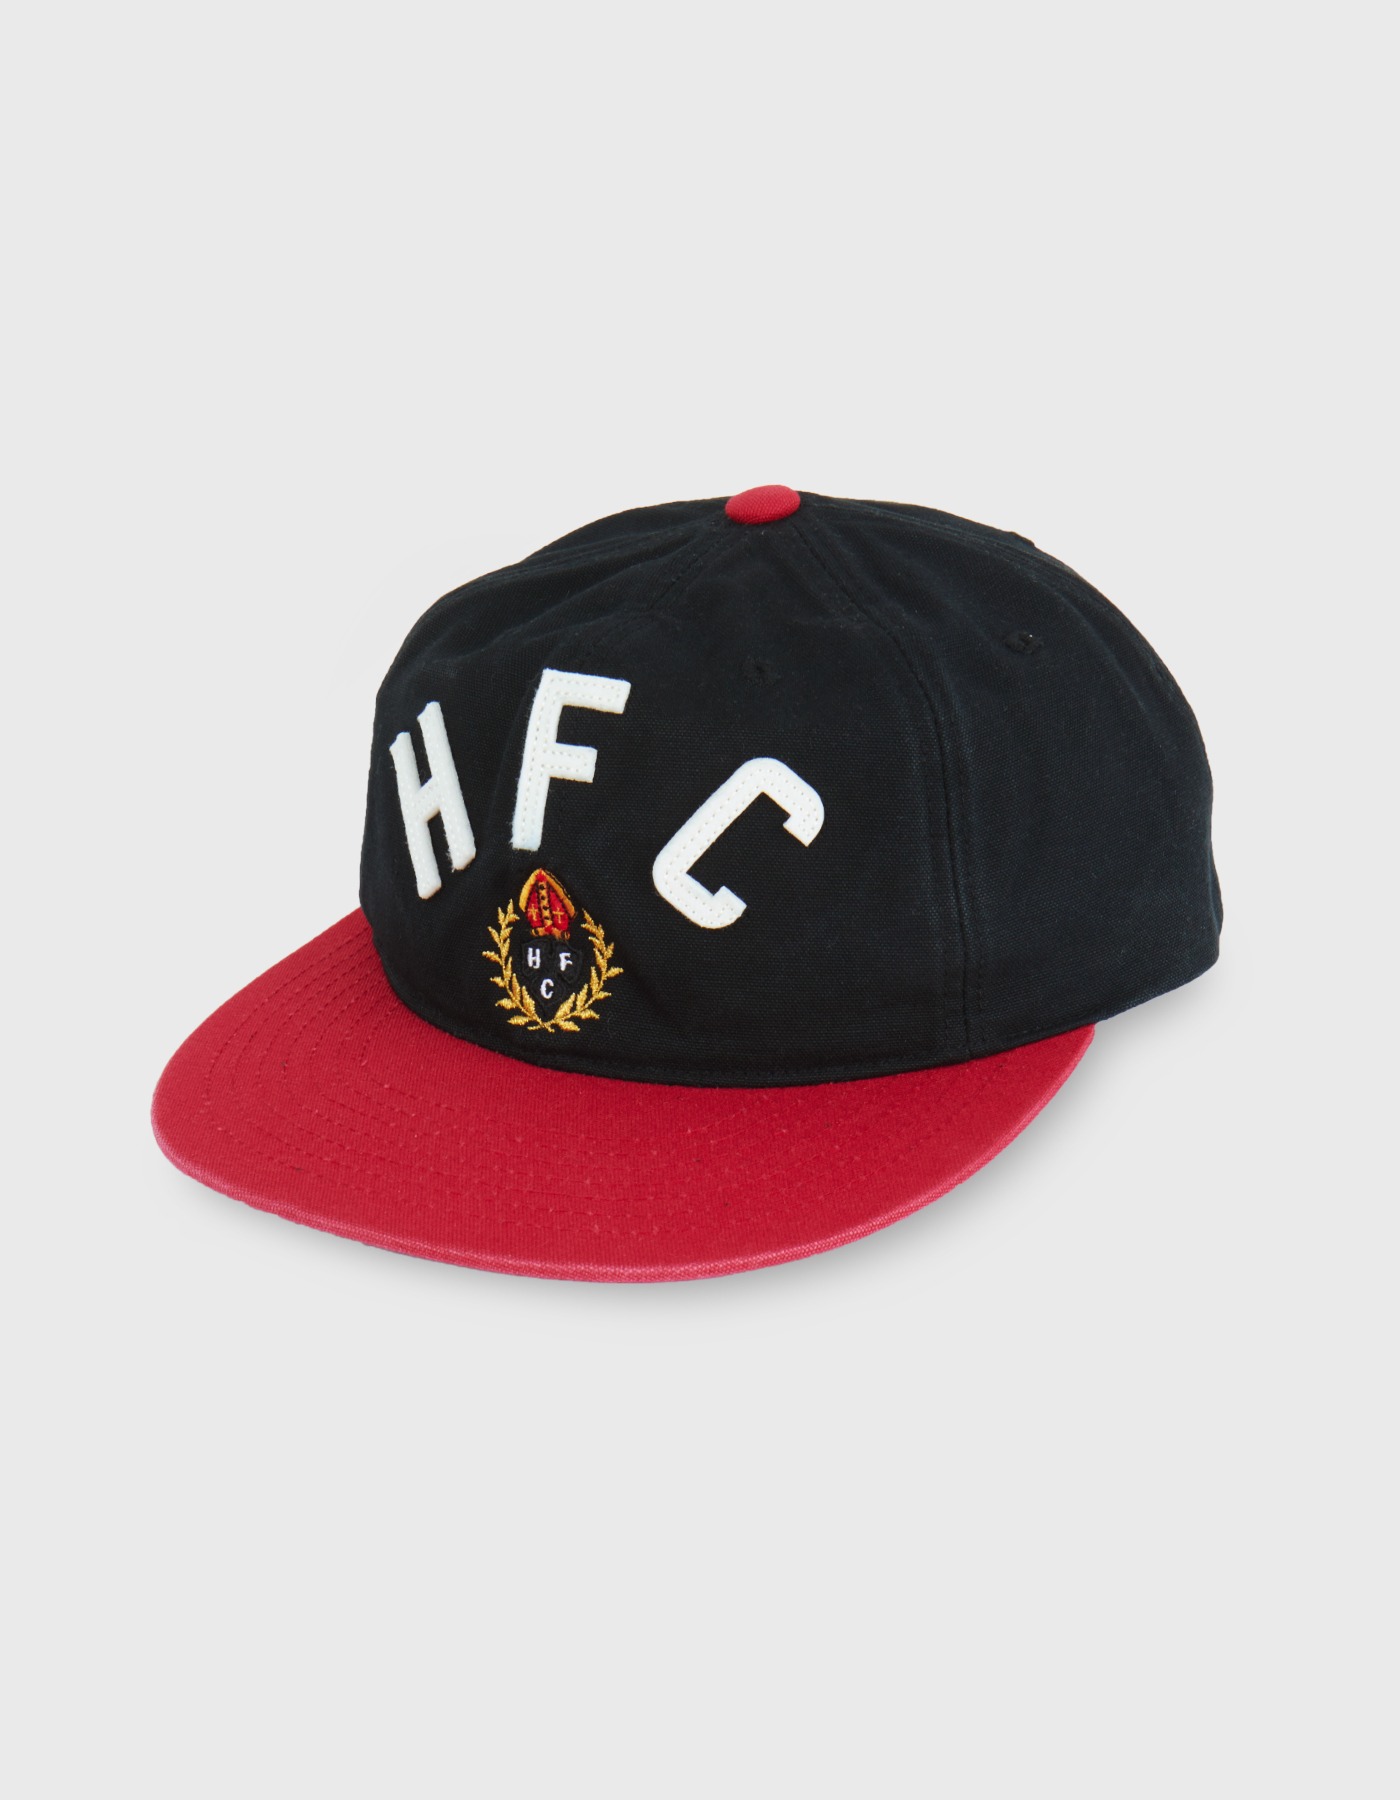 HFC FELT 6 PANEL CAP / Black-Red